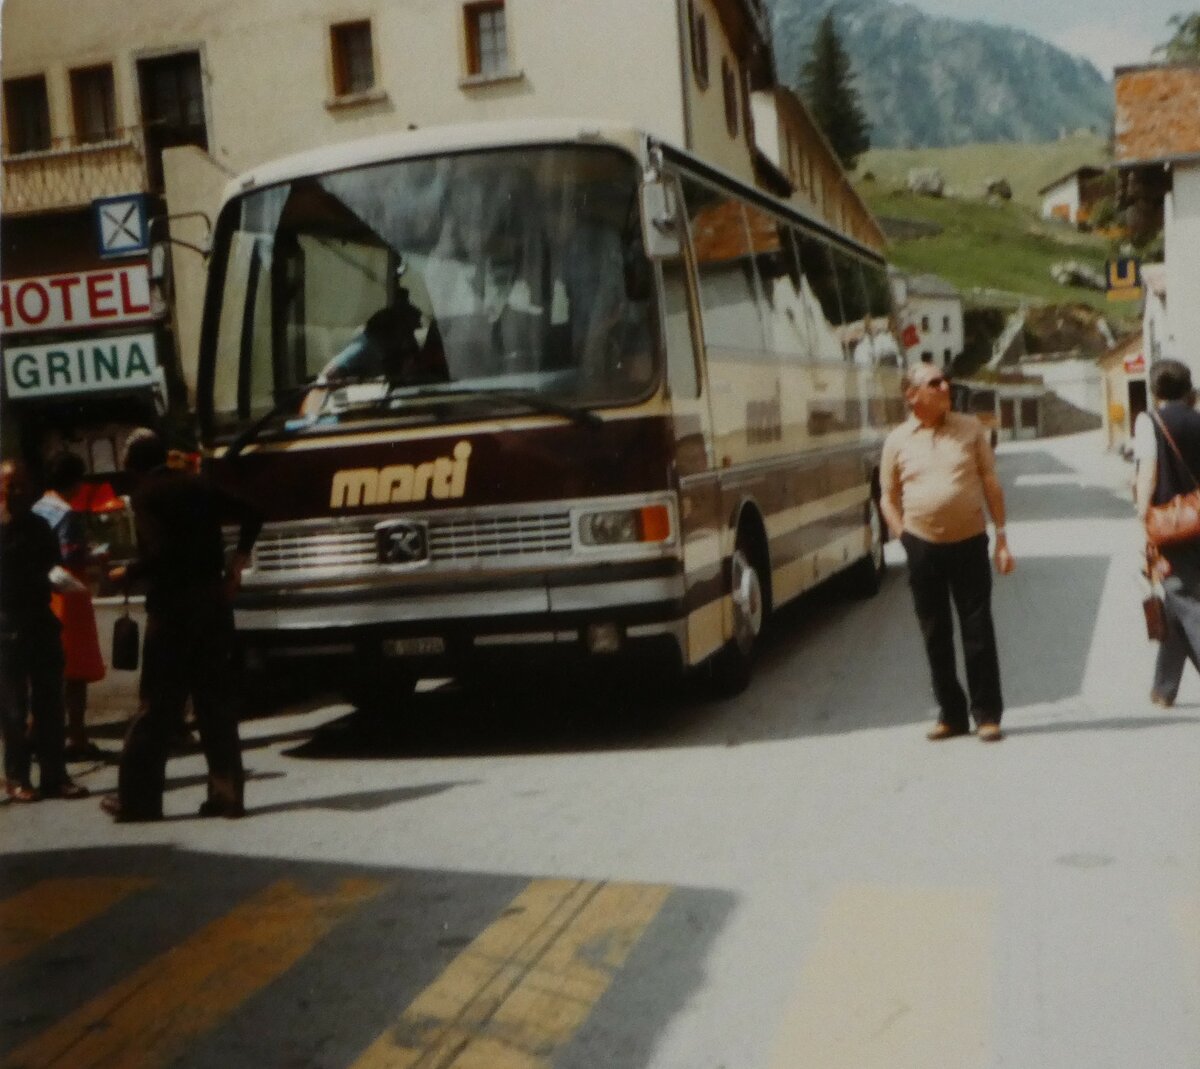 (MD491) - Aus dem Archiv: Marti, Kallnach - Nr. 24/BE 102'224 - Setra um 1980 in Simplon Dorf, Hotel Grina